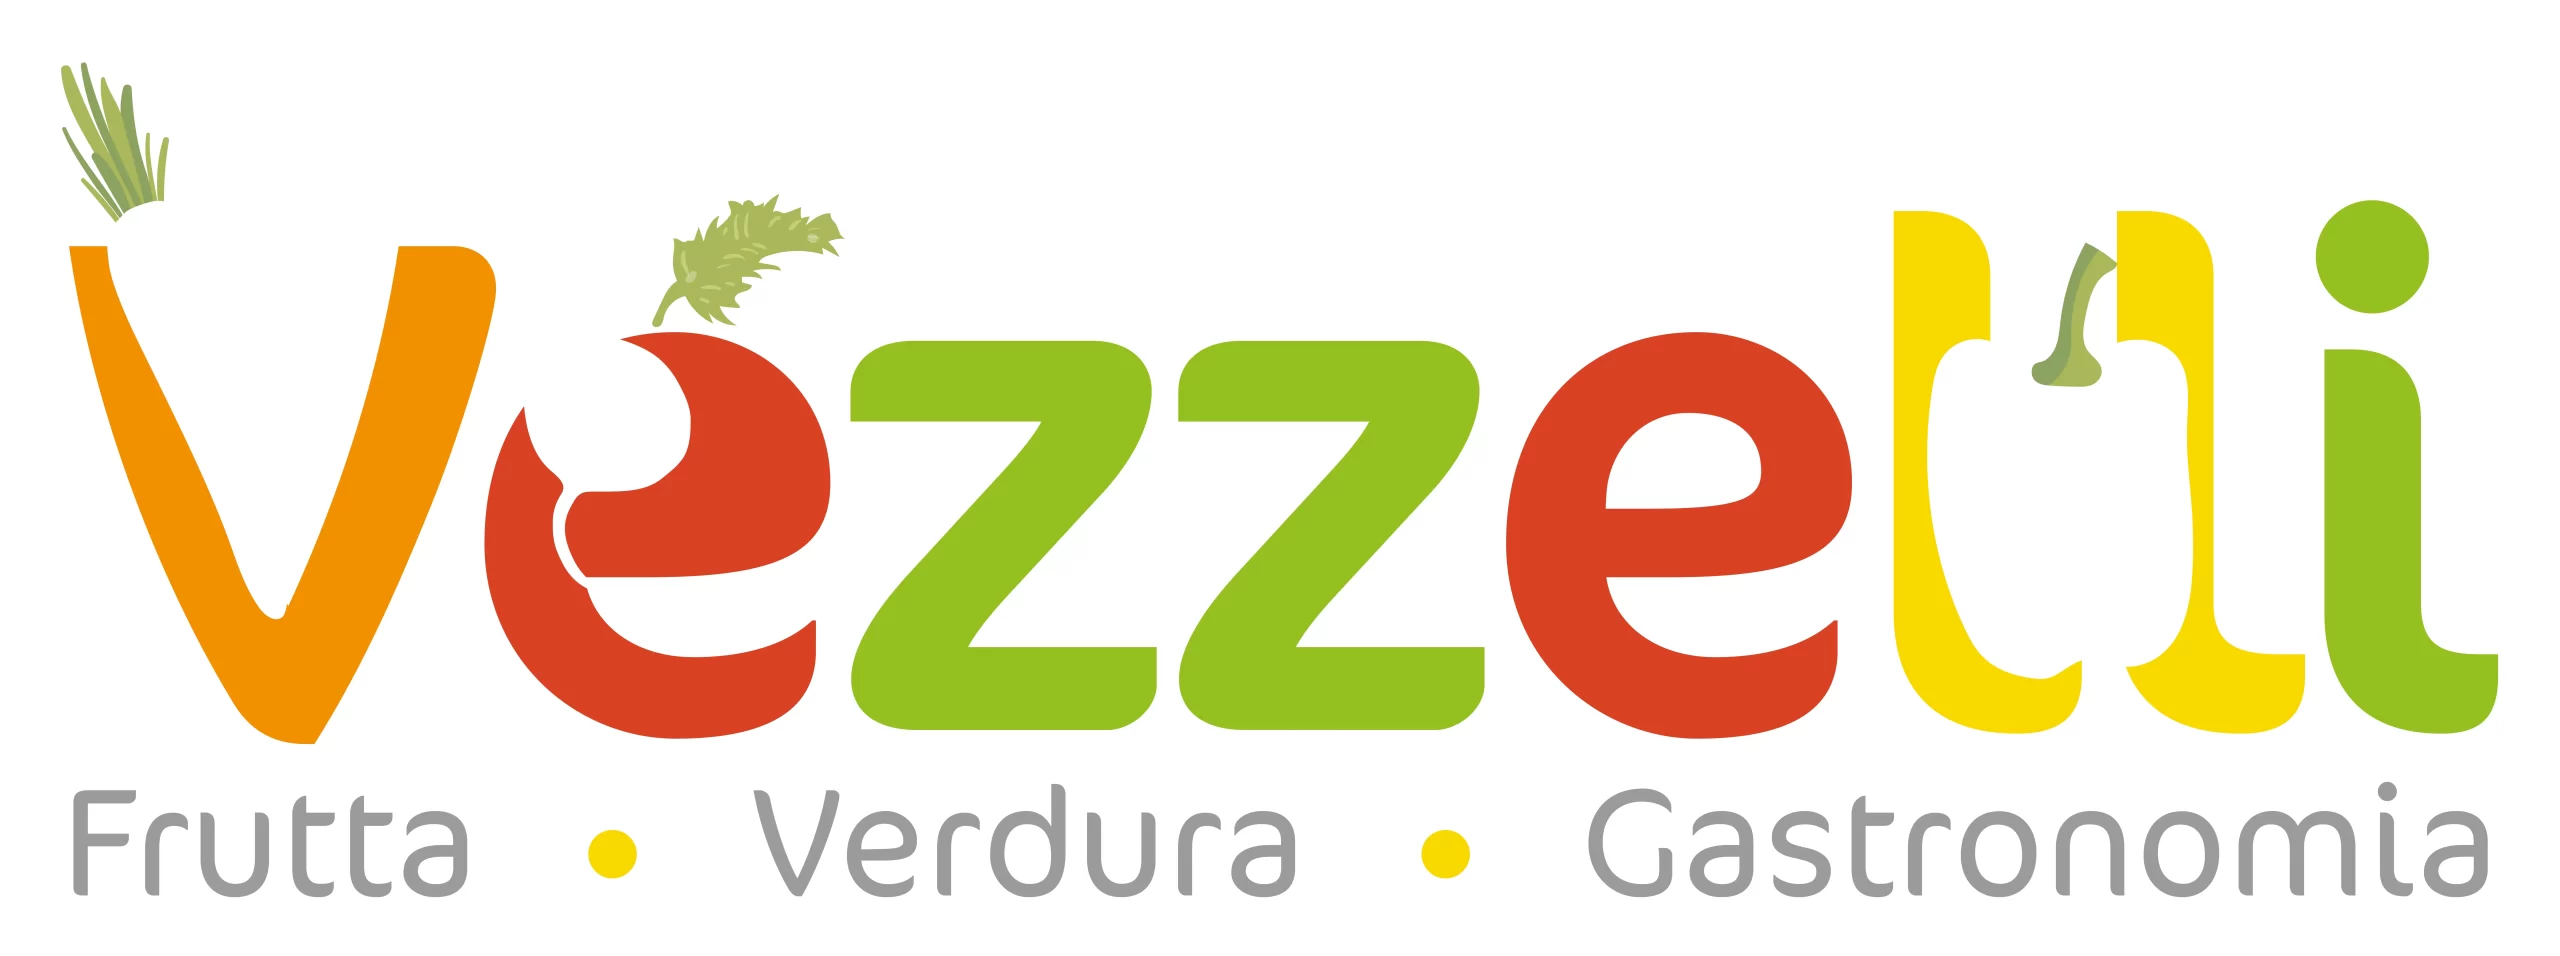 Logo or_Vezzelli